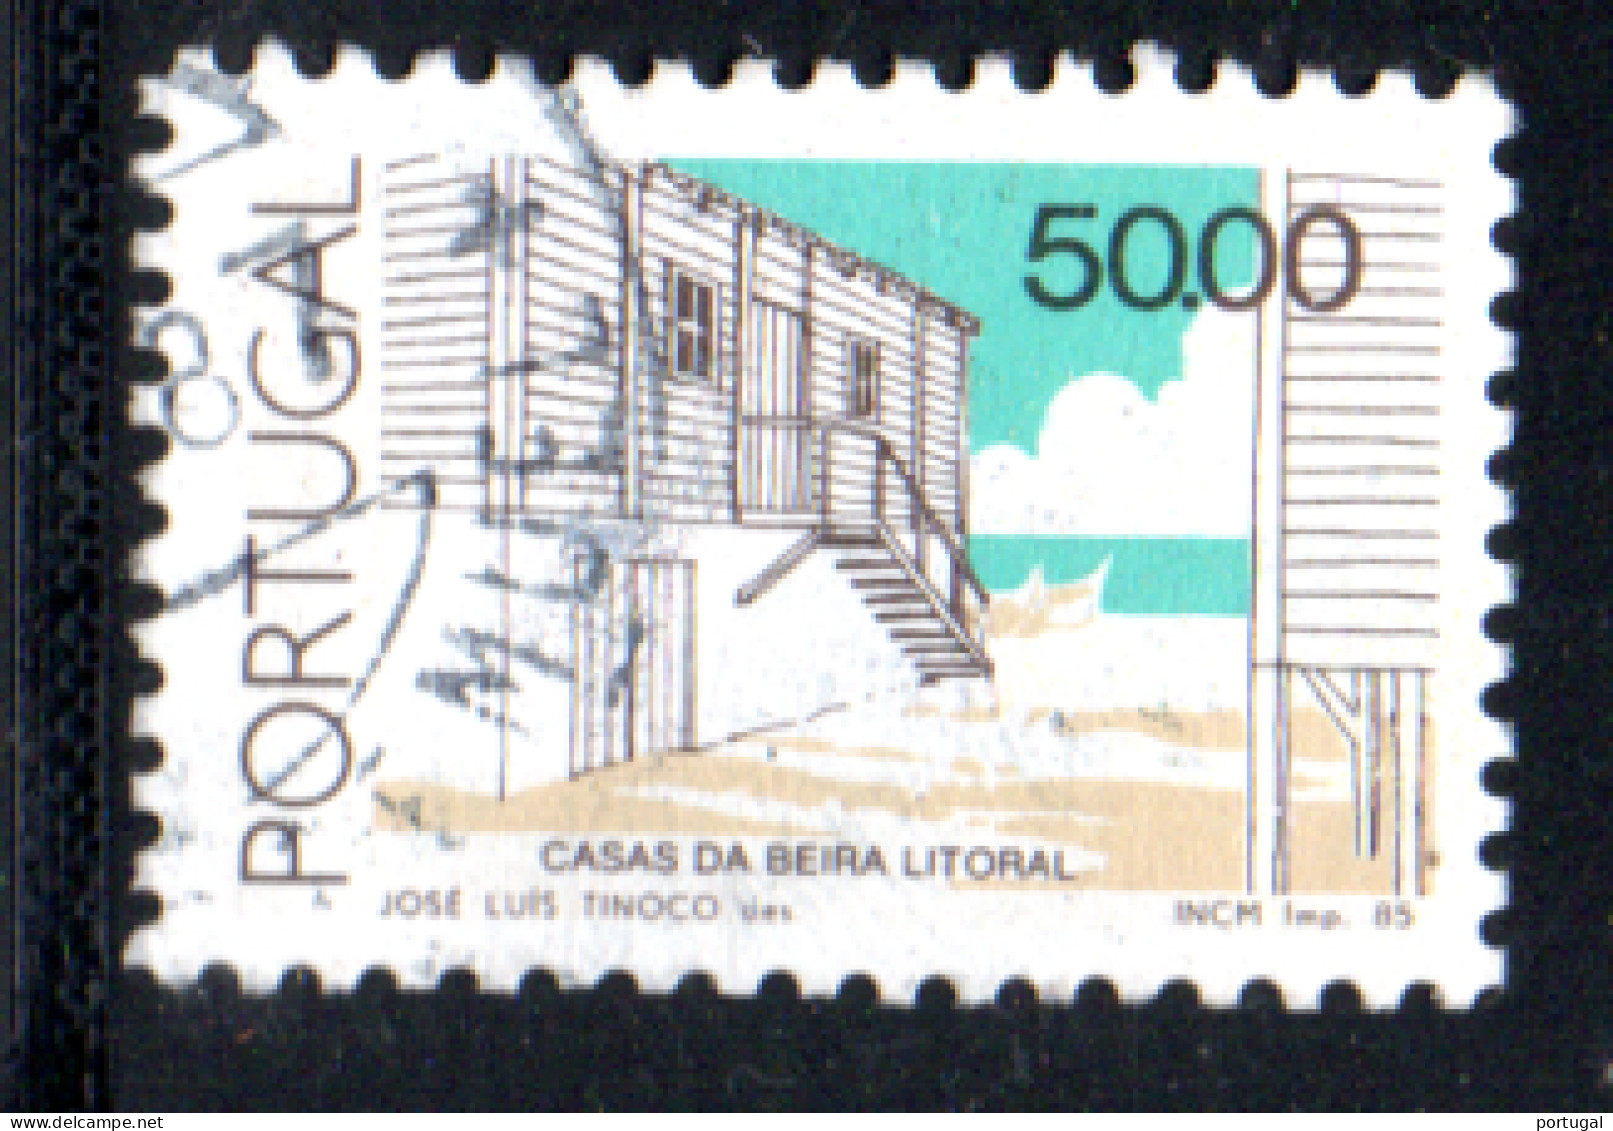 N° 1642 - 1985 - Usati